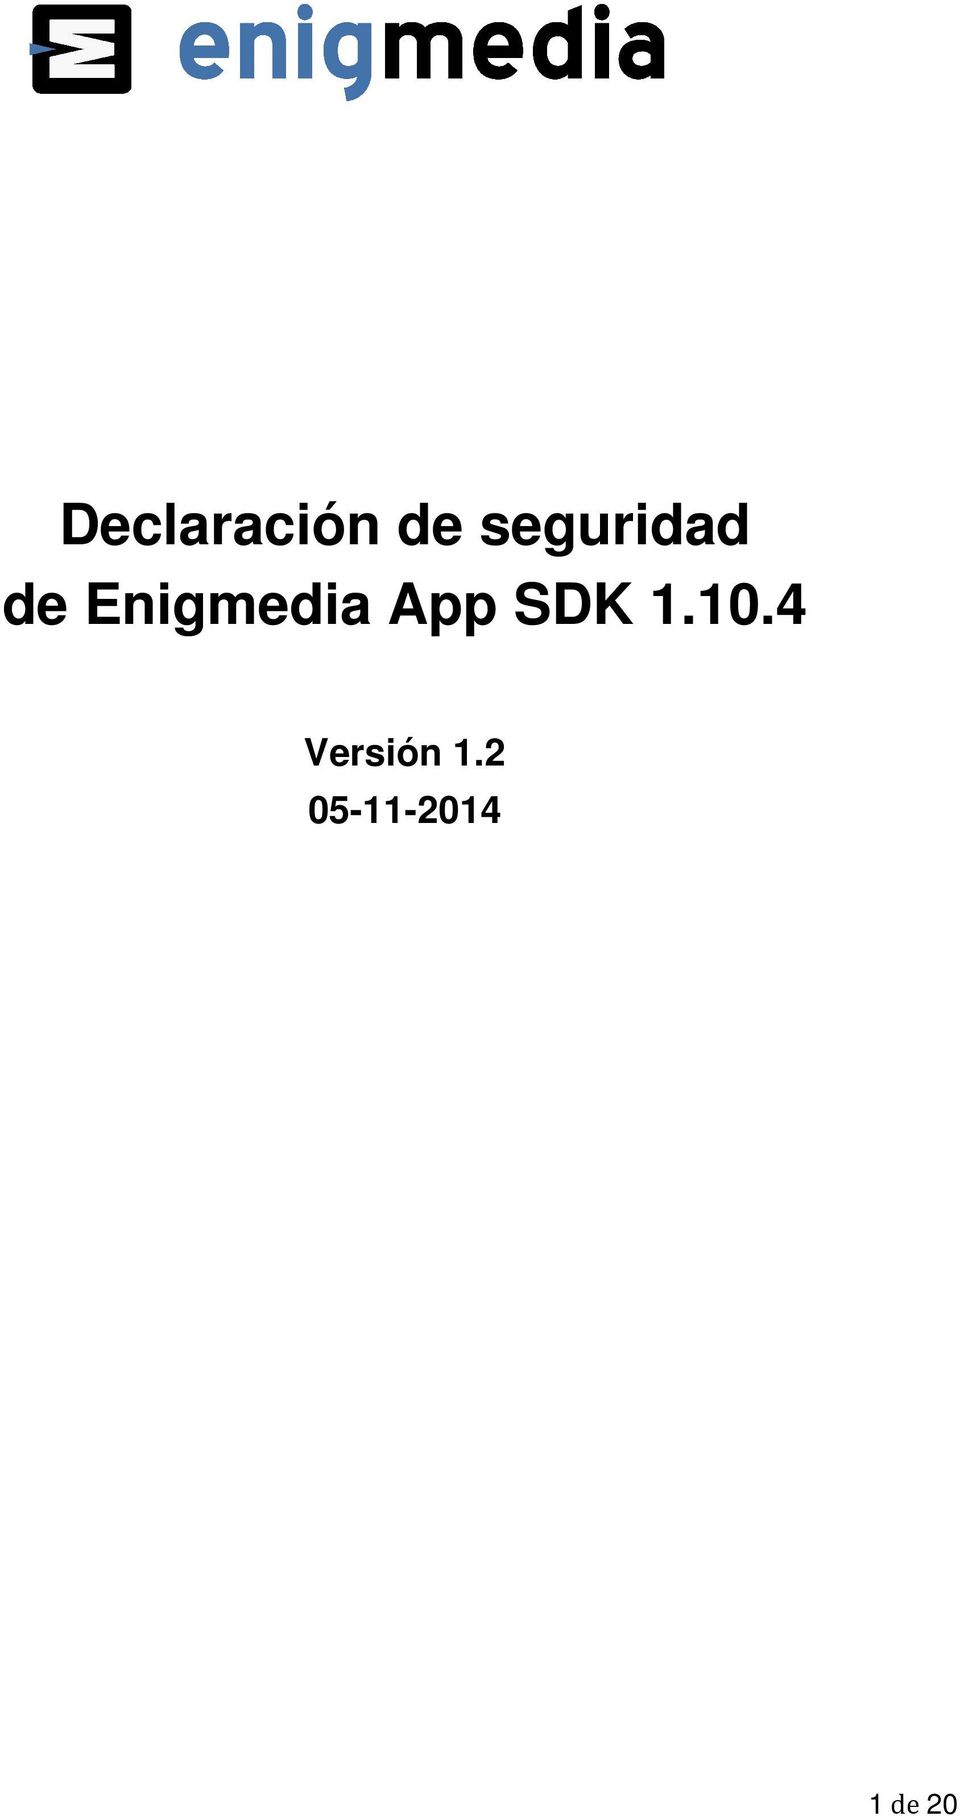 Enigmedia App SDK 1.